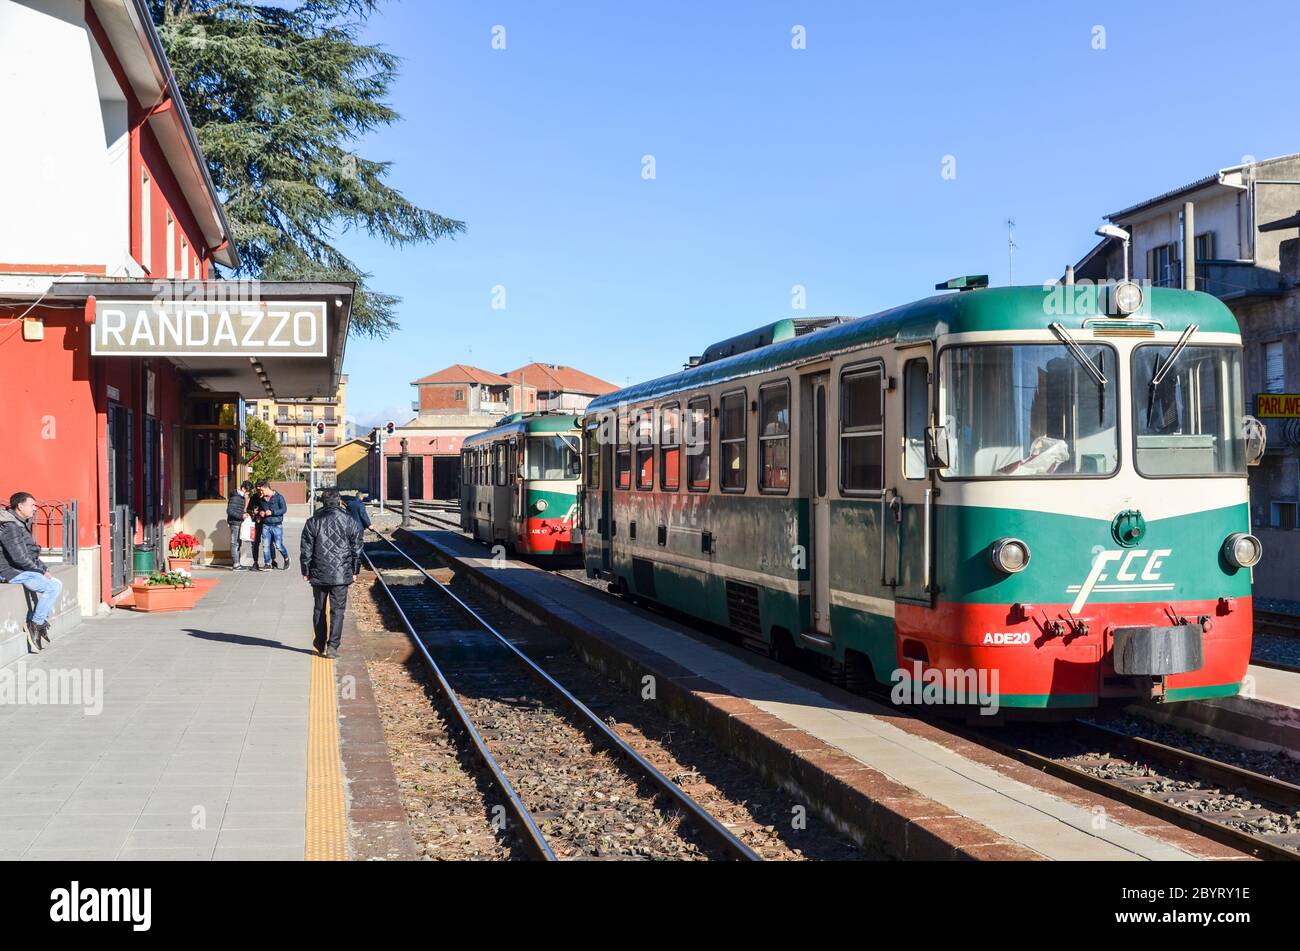 Train station of Randazzo, along the Ferrovia Circumetnea, train line around the Mount Etna, Sicily, Italy Stock Photo